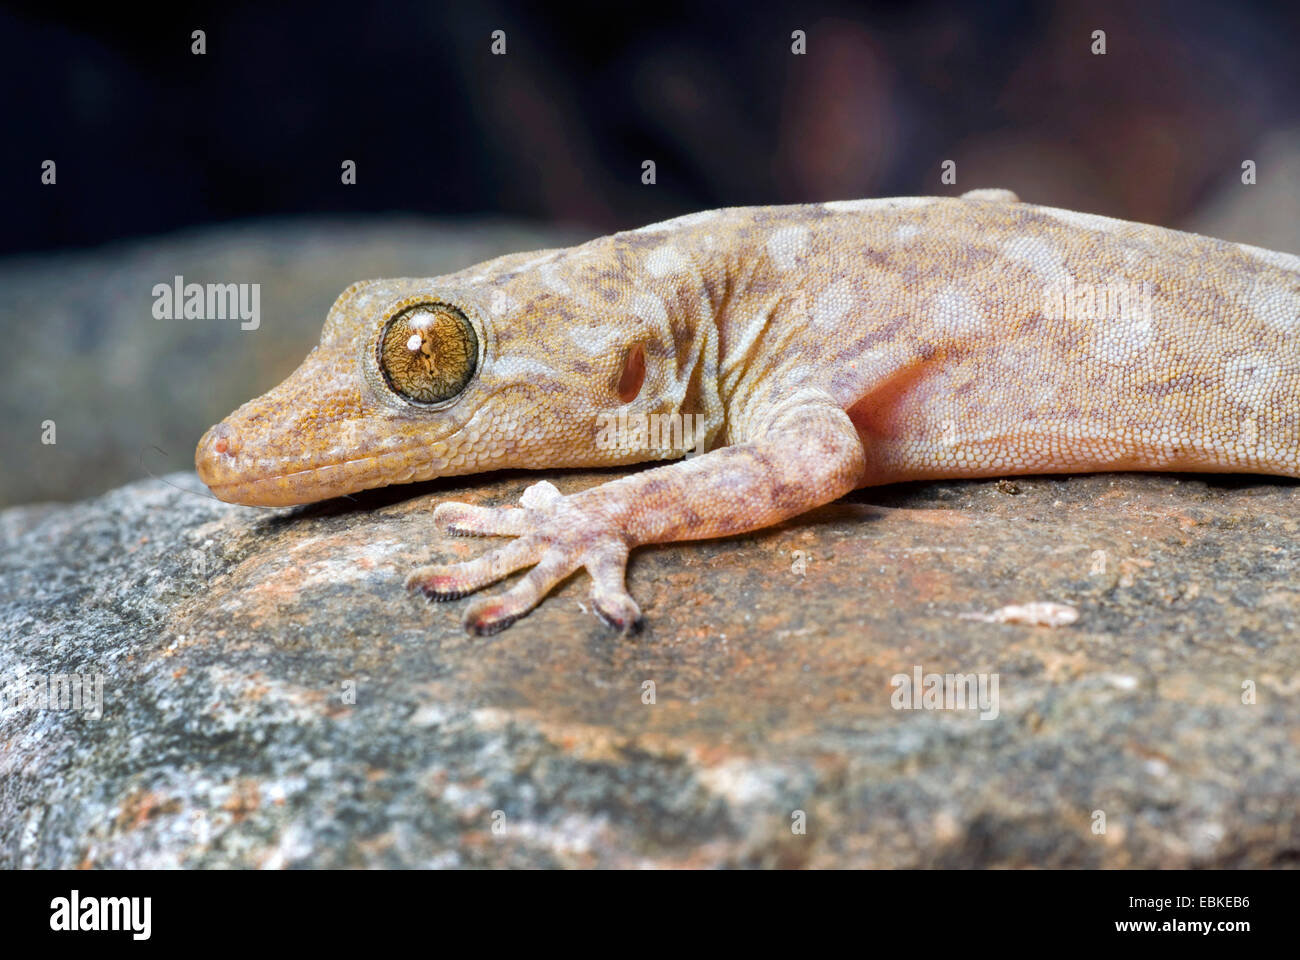 Marbled gecko, Marbled velvet gecko, Marbled Southern Gecko, Australian marbled gecko, Australian clawed gecko (Phyllodactylus marmoratus, Christinus marmoratus, Gekko marmorata, Gekko marmoratus), portrait Stock Photo